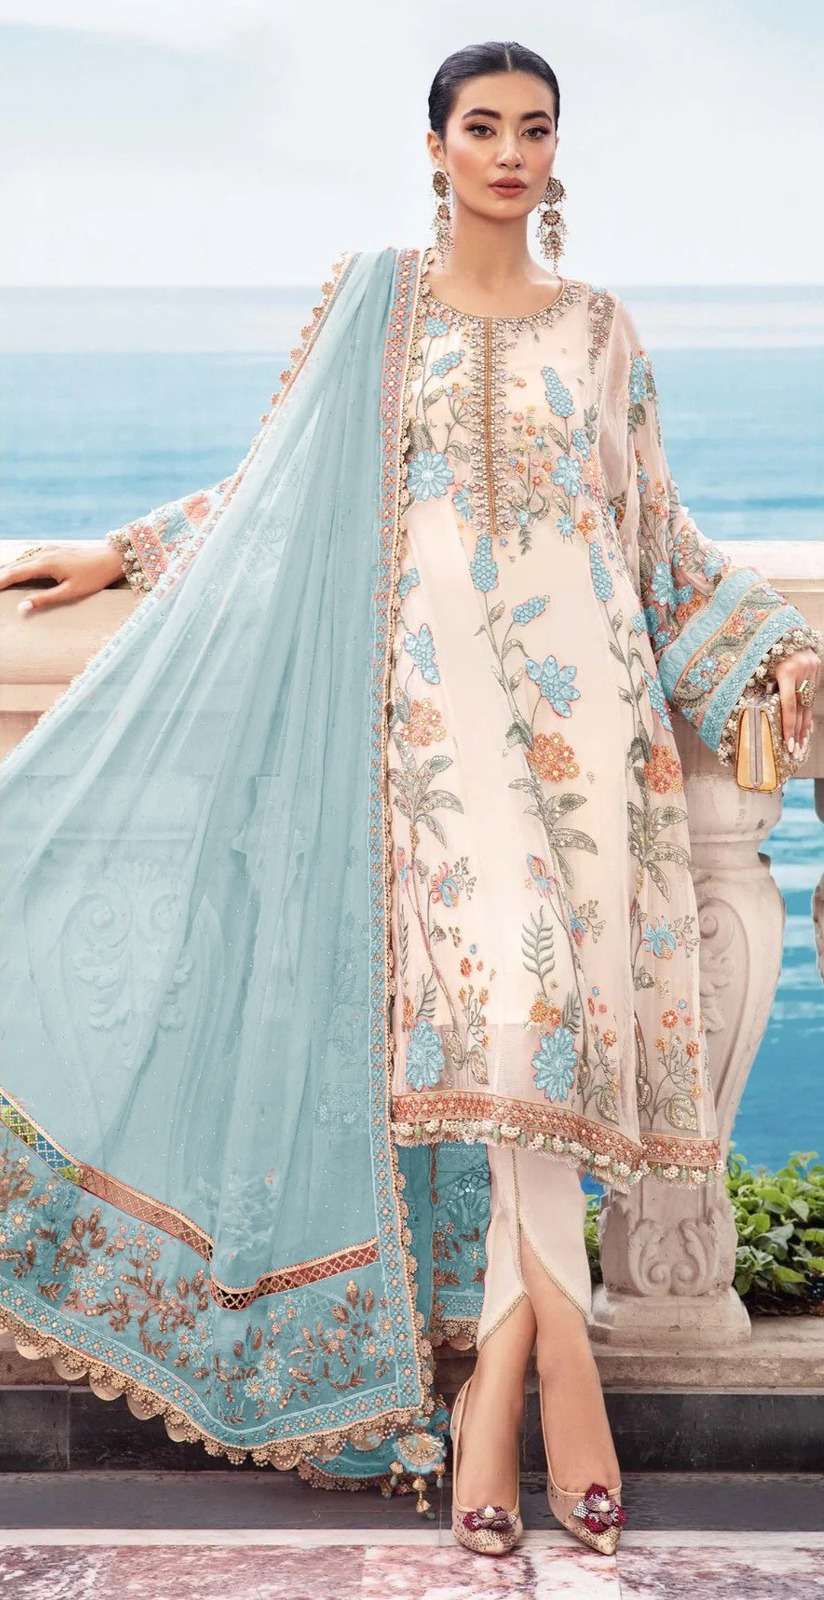 Ramsha R 600 Nx Georgette Pakistani Suits Wholesale catalog